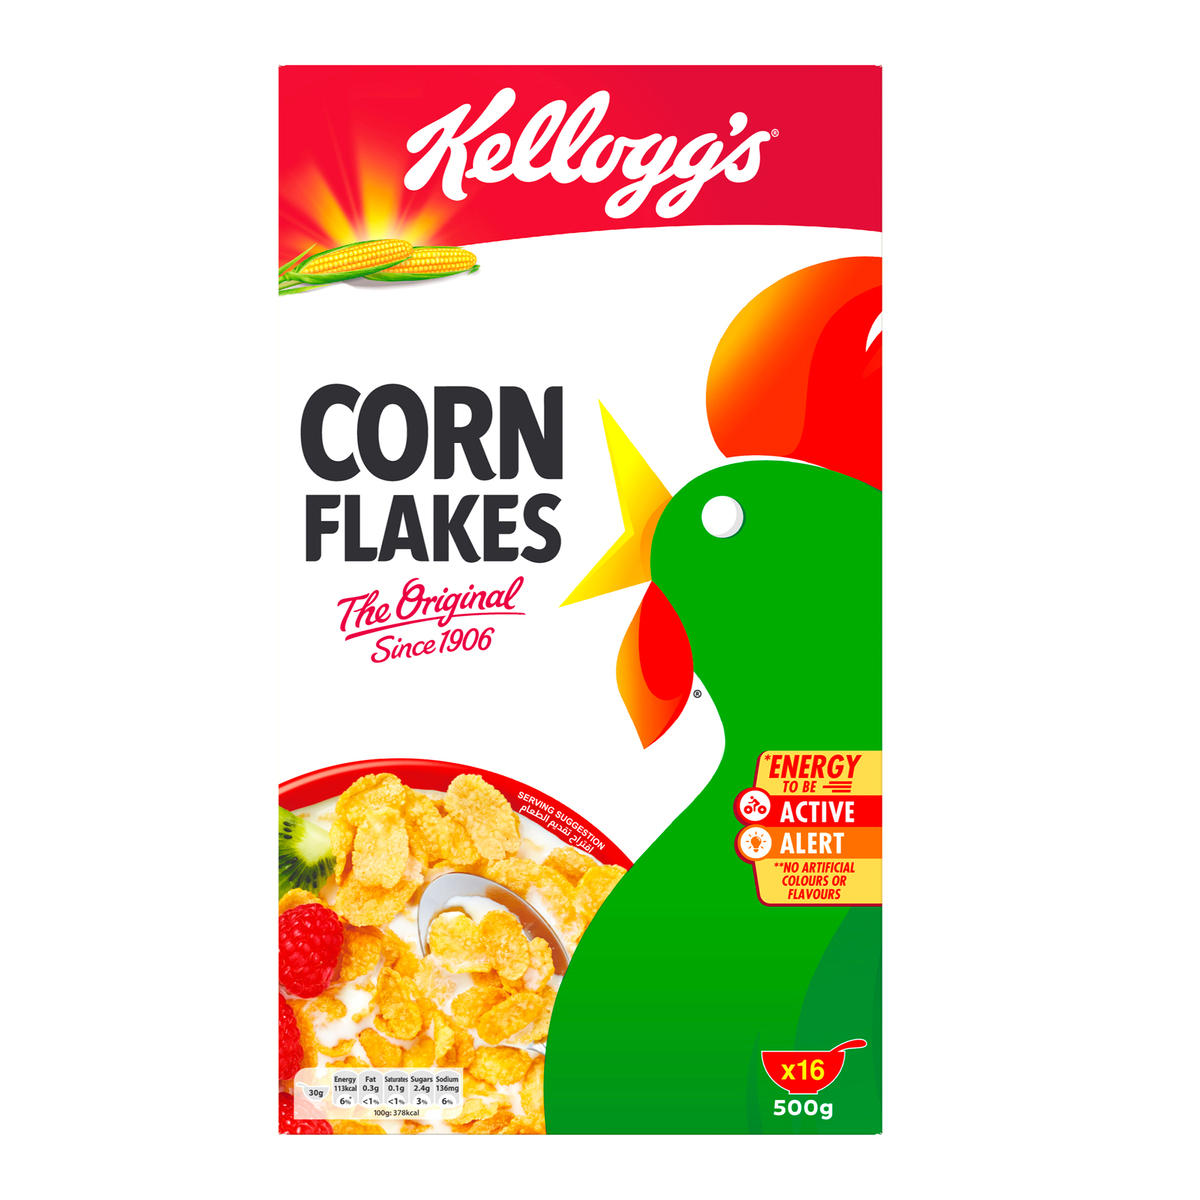 Kellogg's Corn Flakes The Original 500 g Online at Best Price, Corn Flakes